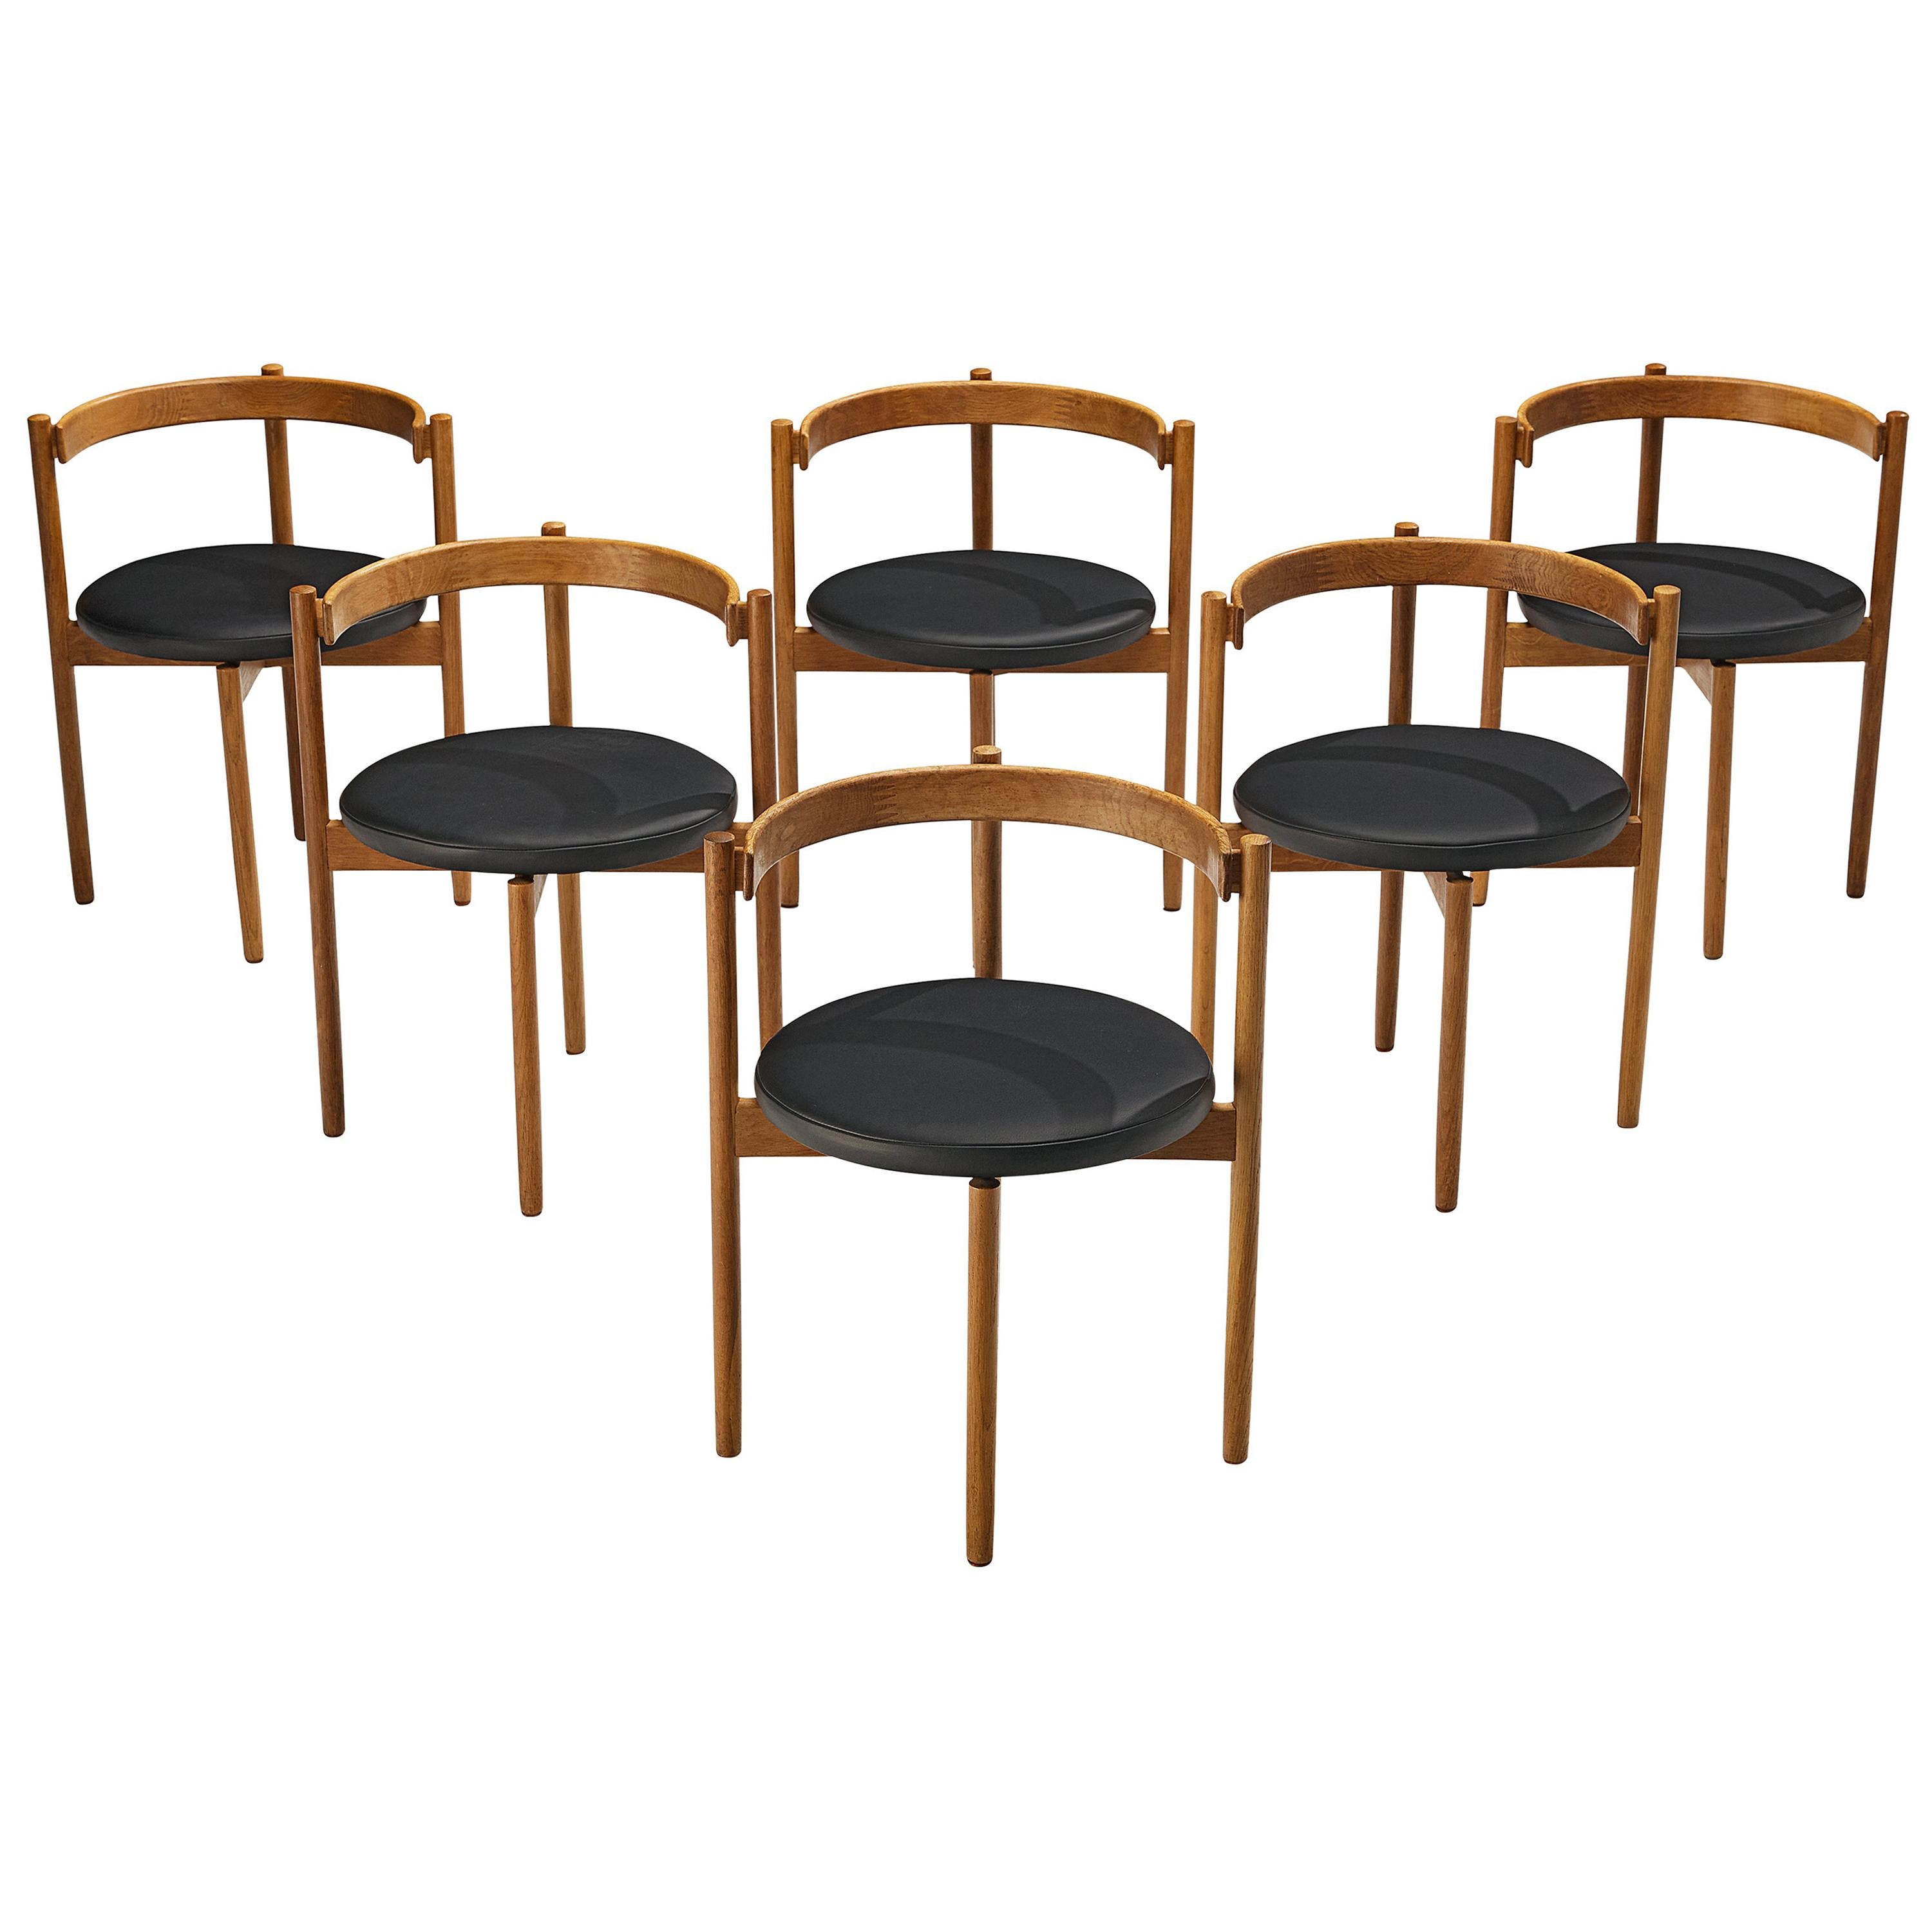 Hugo Frandsen for Børge Søndergaard Set of Six Dining Chairs in Oak and Leather